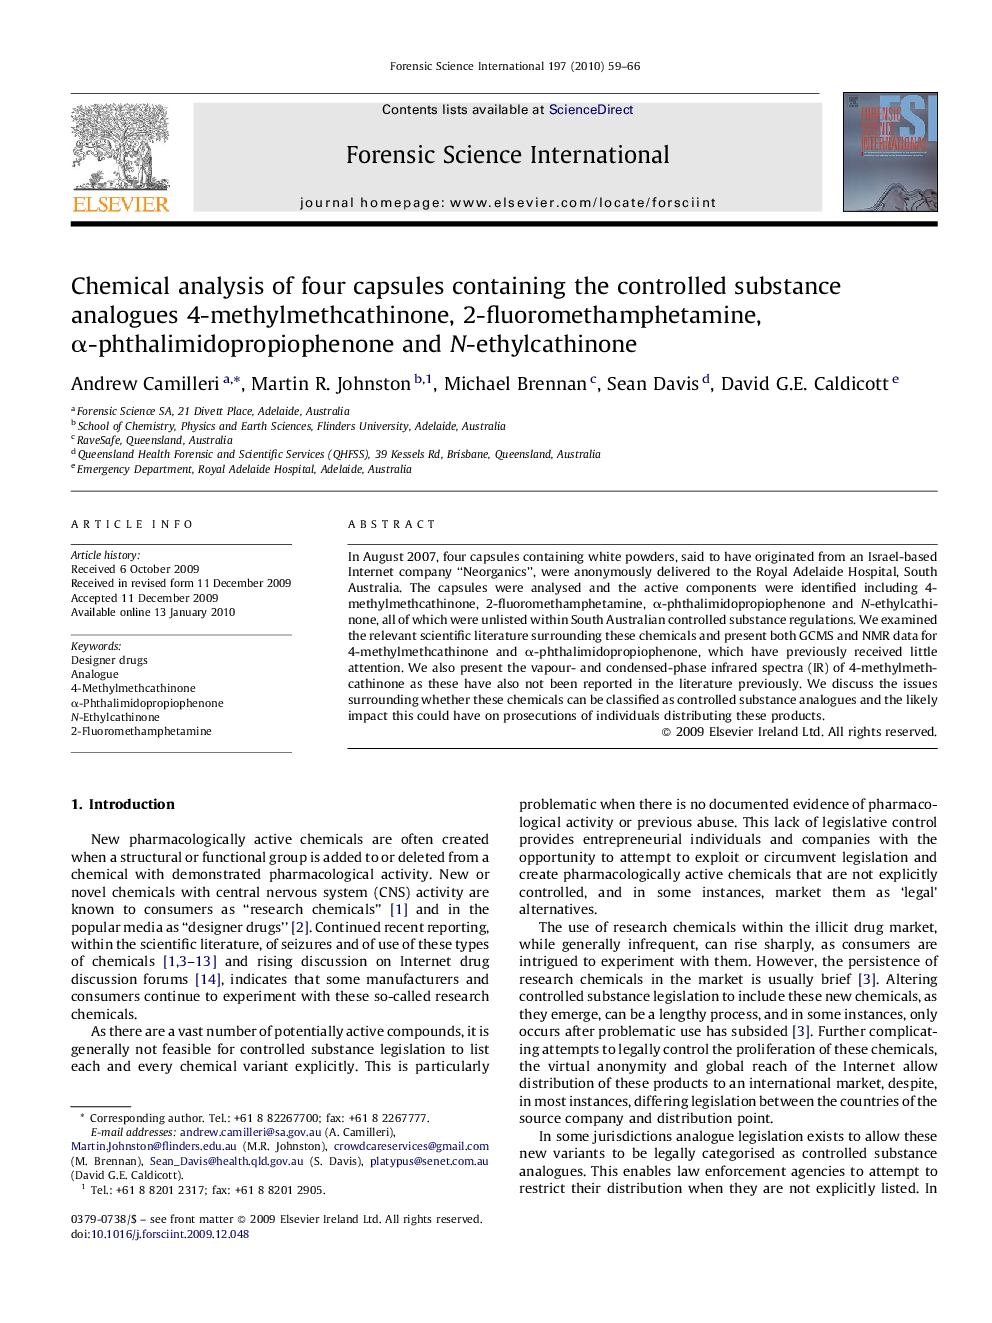 Chemical analysis of four capsules containing the controlled substance analogues 4-methylmethcathinone, 2-fluoromethamphetamine, α-phthalimidopropiophenone and N-ethylcathinone